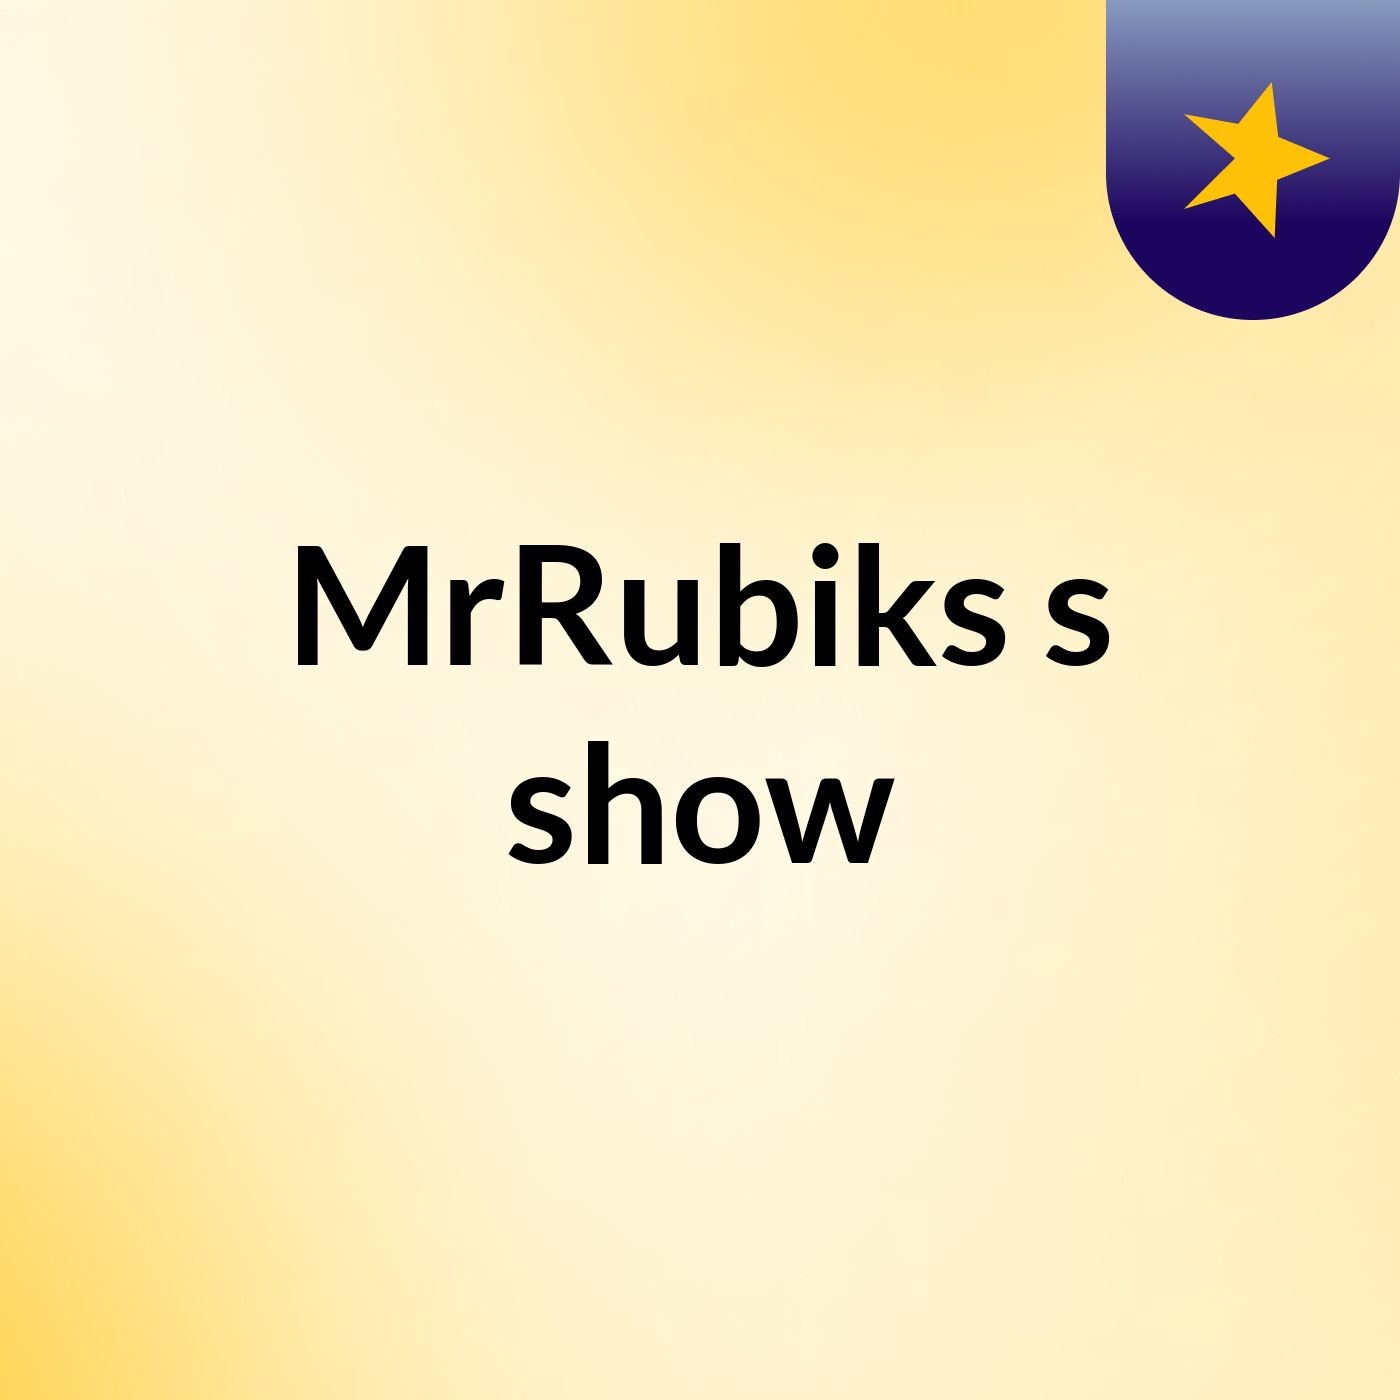 MrRubiks's show